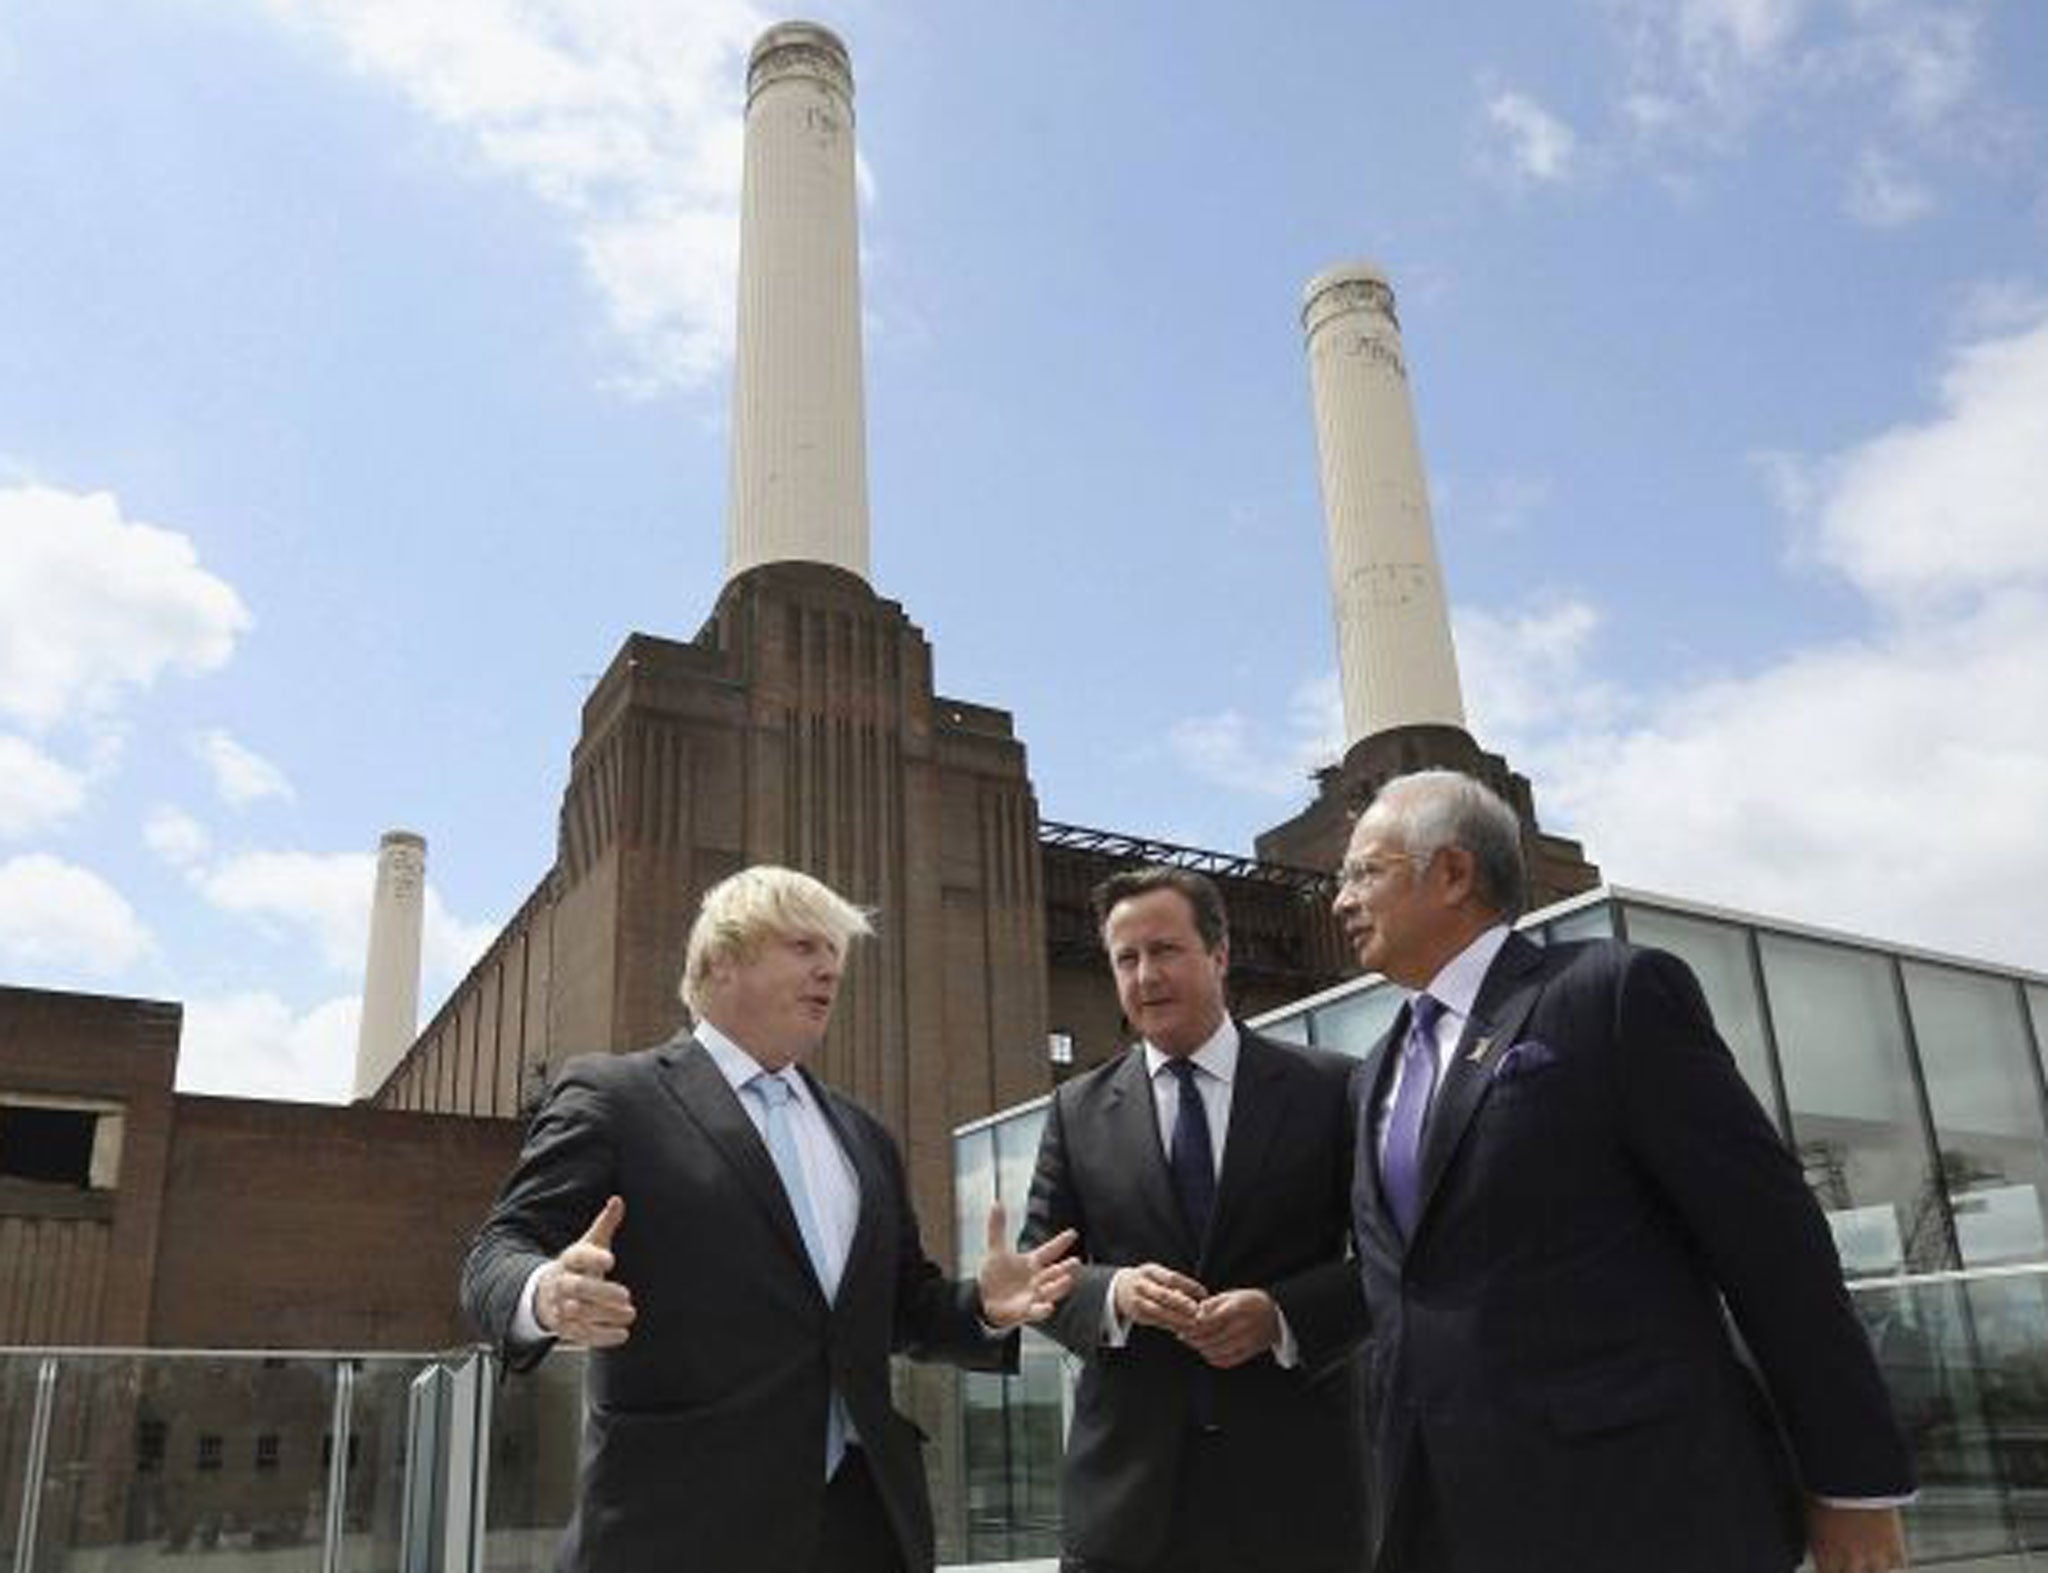 Boris Johnson speaks with David Cameron and Malaysian PM Najib Razak at Battersea Power Station 